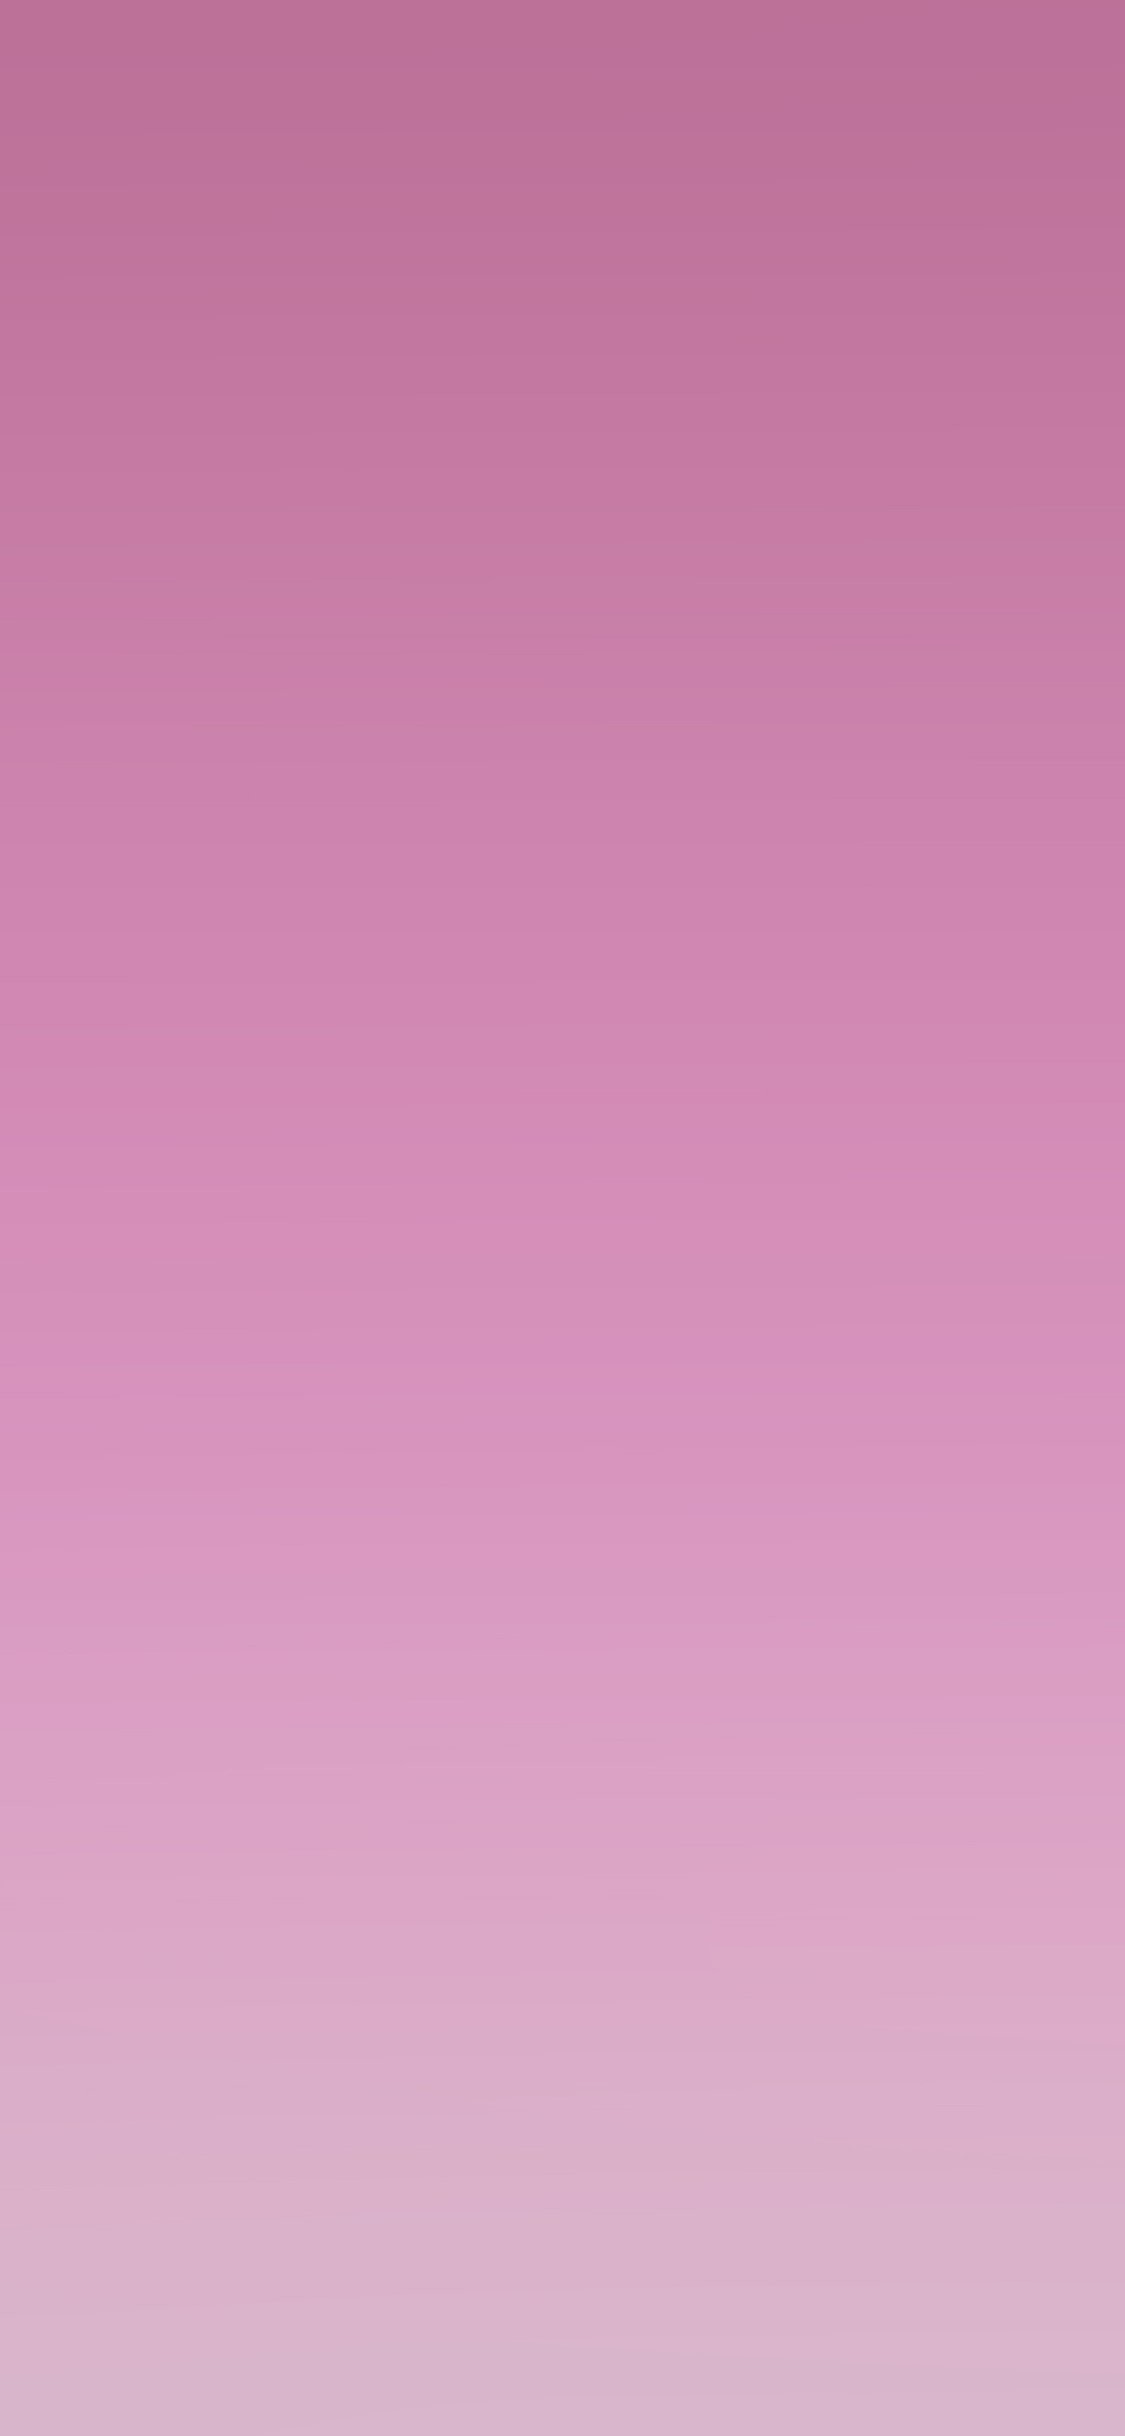 Pink Pastel Wallpaper Iphone Soft Pink Wallpaper 183 - Soft Pink Hd Wallpaper Iphone - HD Wallpaper 